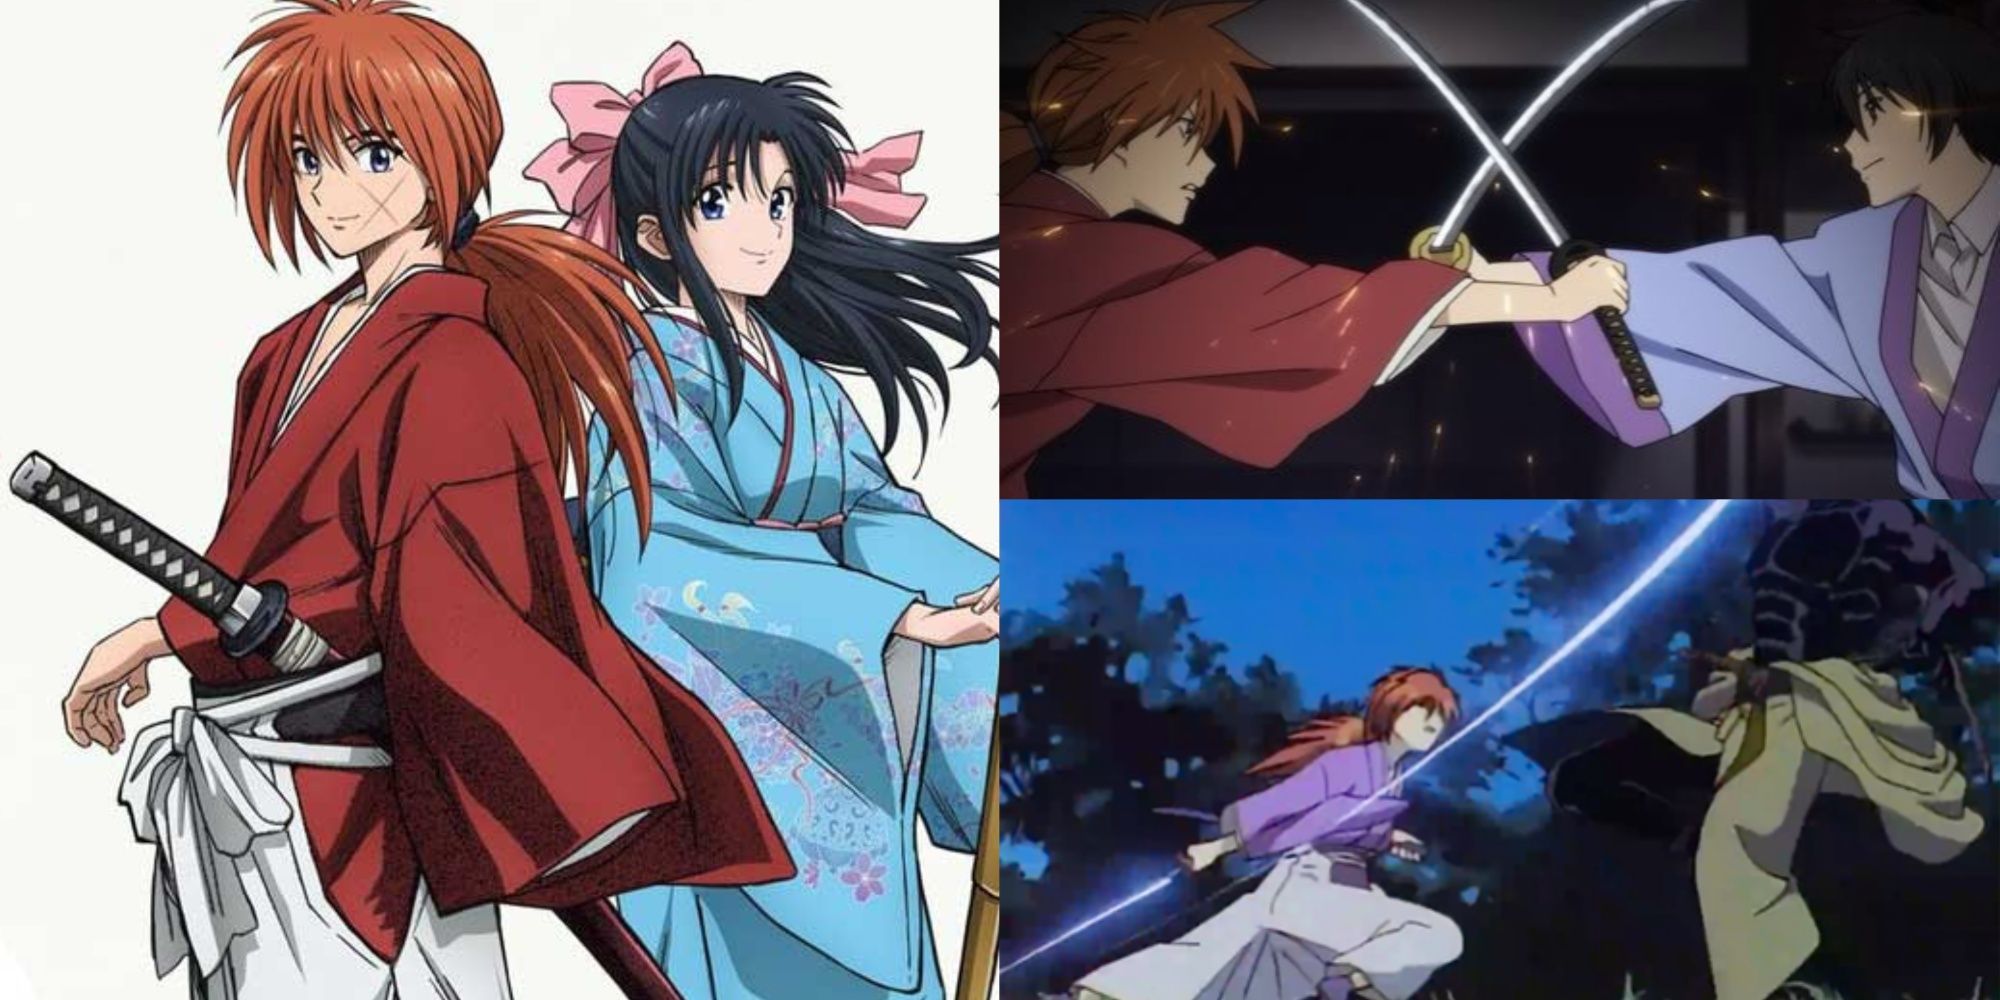 Rurouni Kenshin cover with some fight scenes